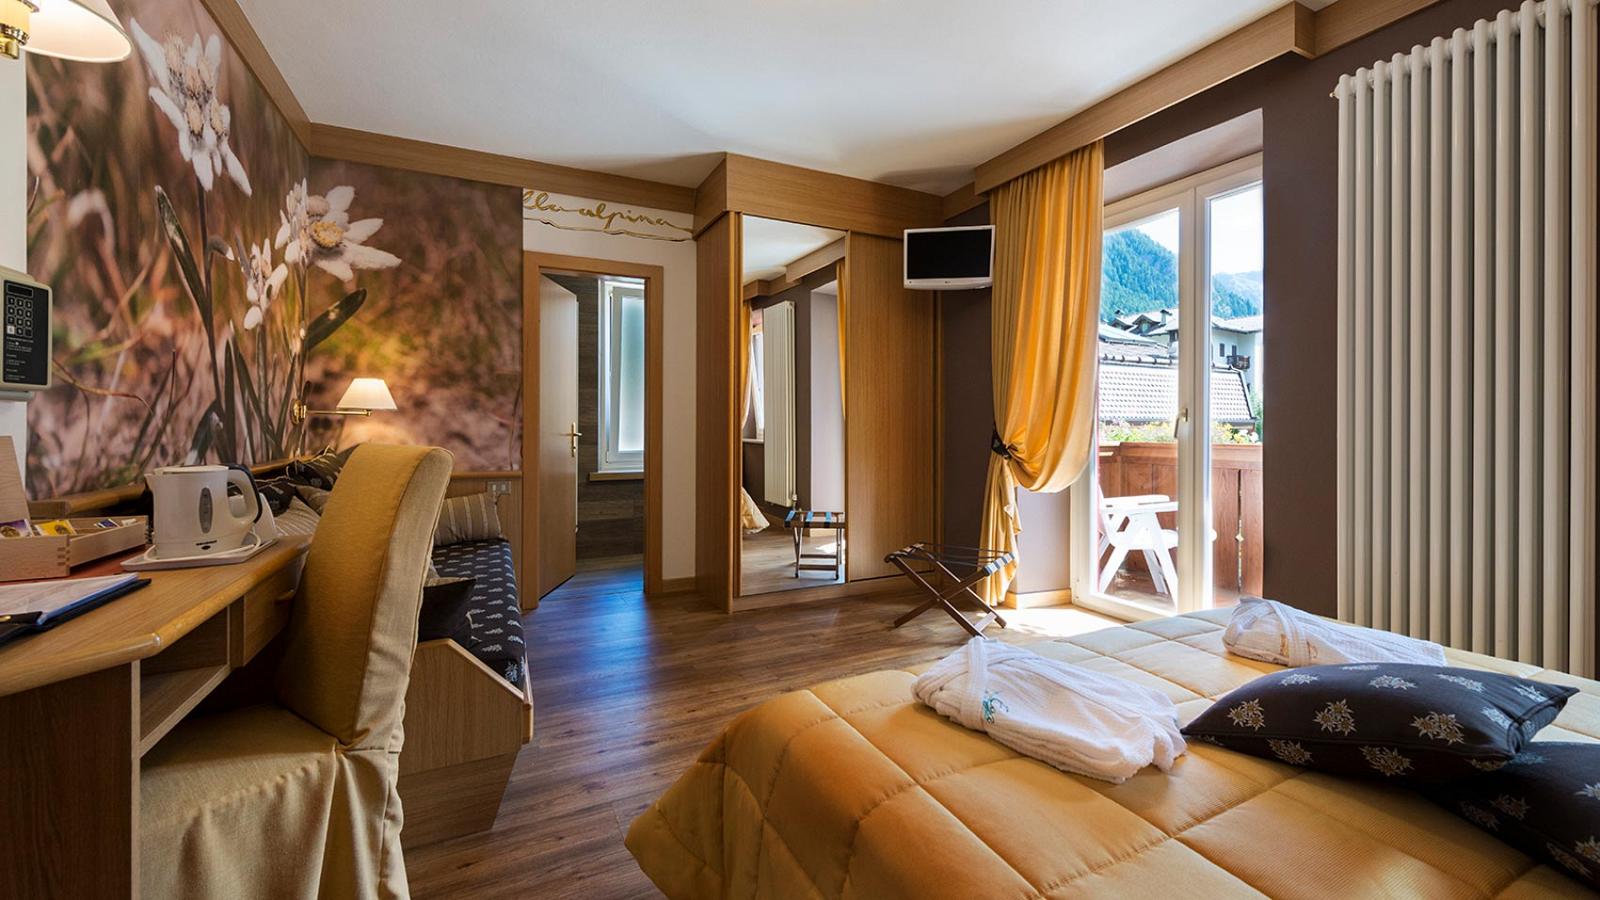 a comfortale hotel room - the new junior room at La Serenella